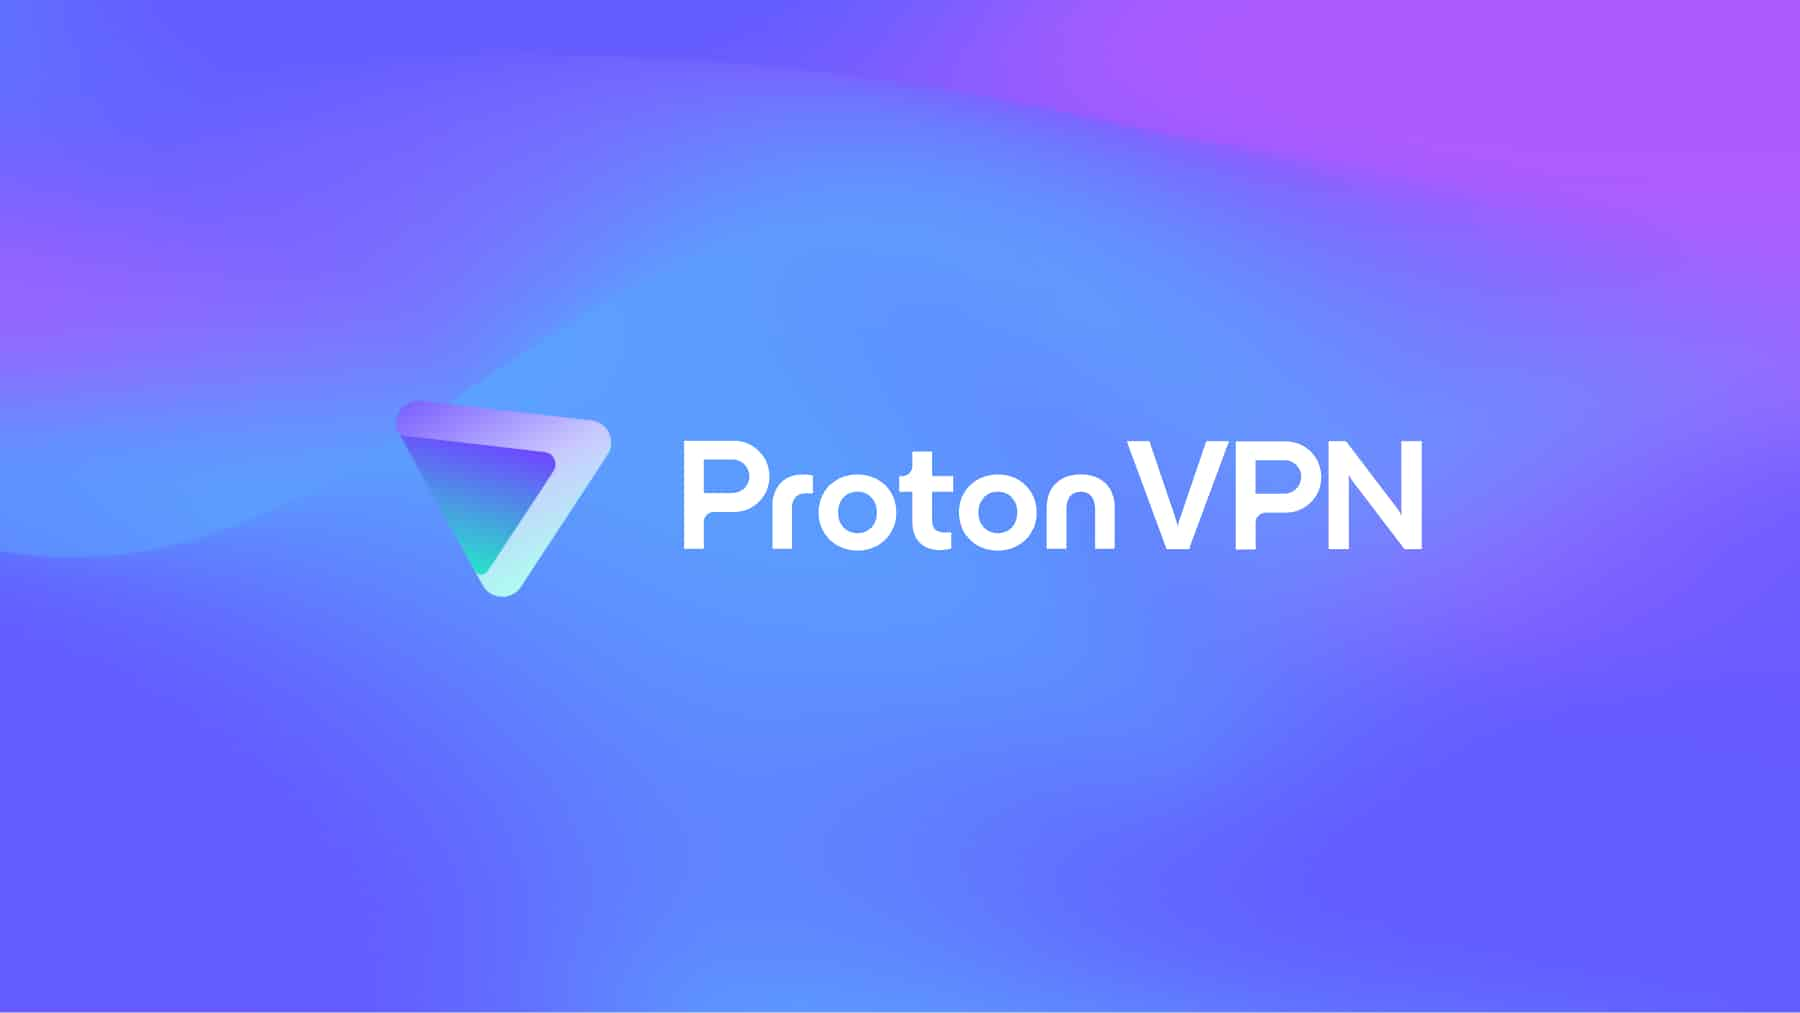 Proton VPN is a Swiss-based VPN provider